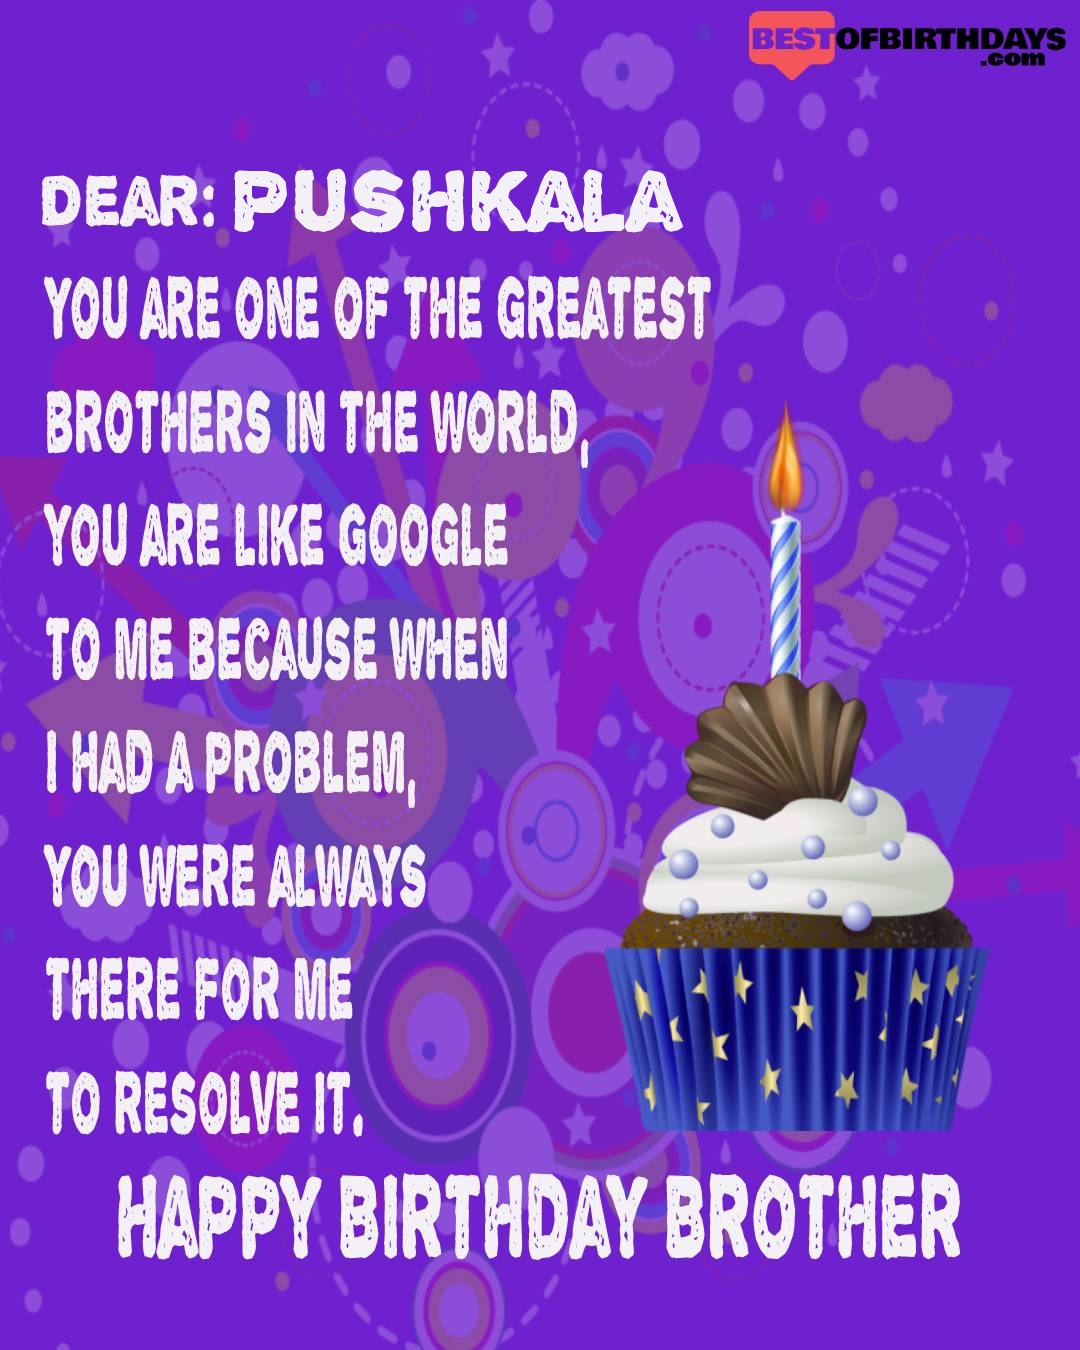 Happy birthday pushkala bhai brother bro